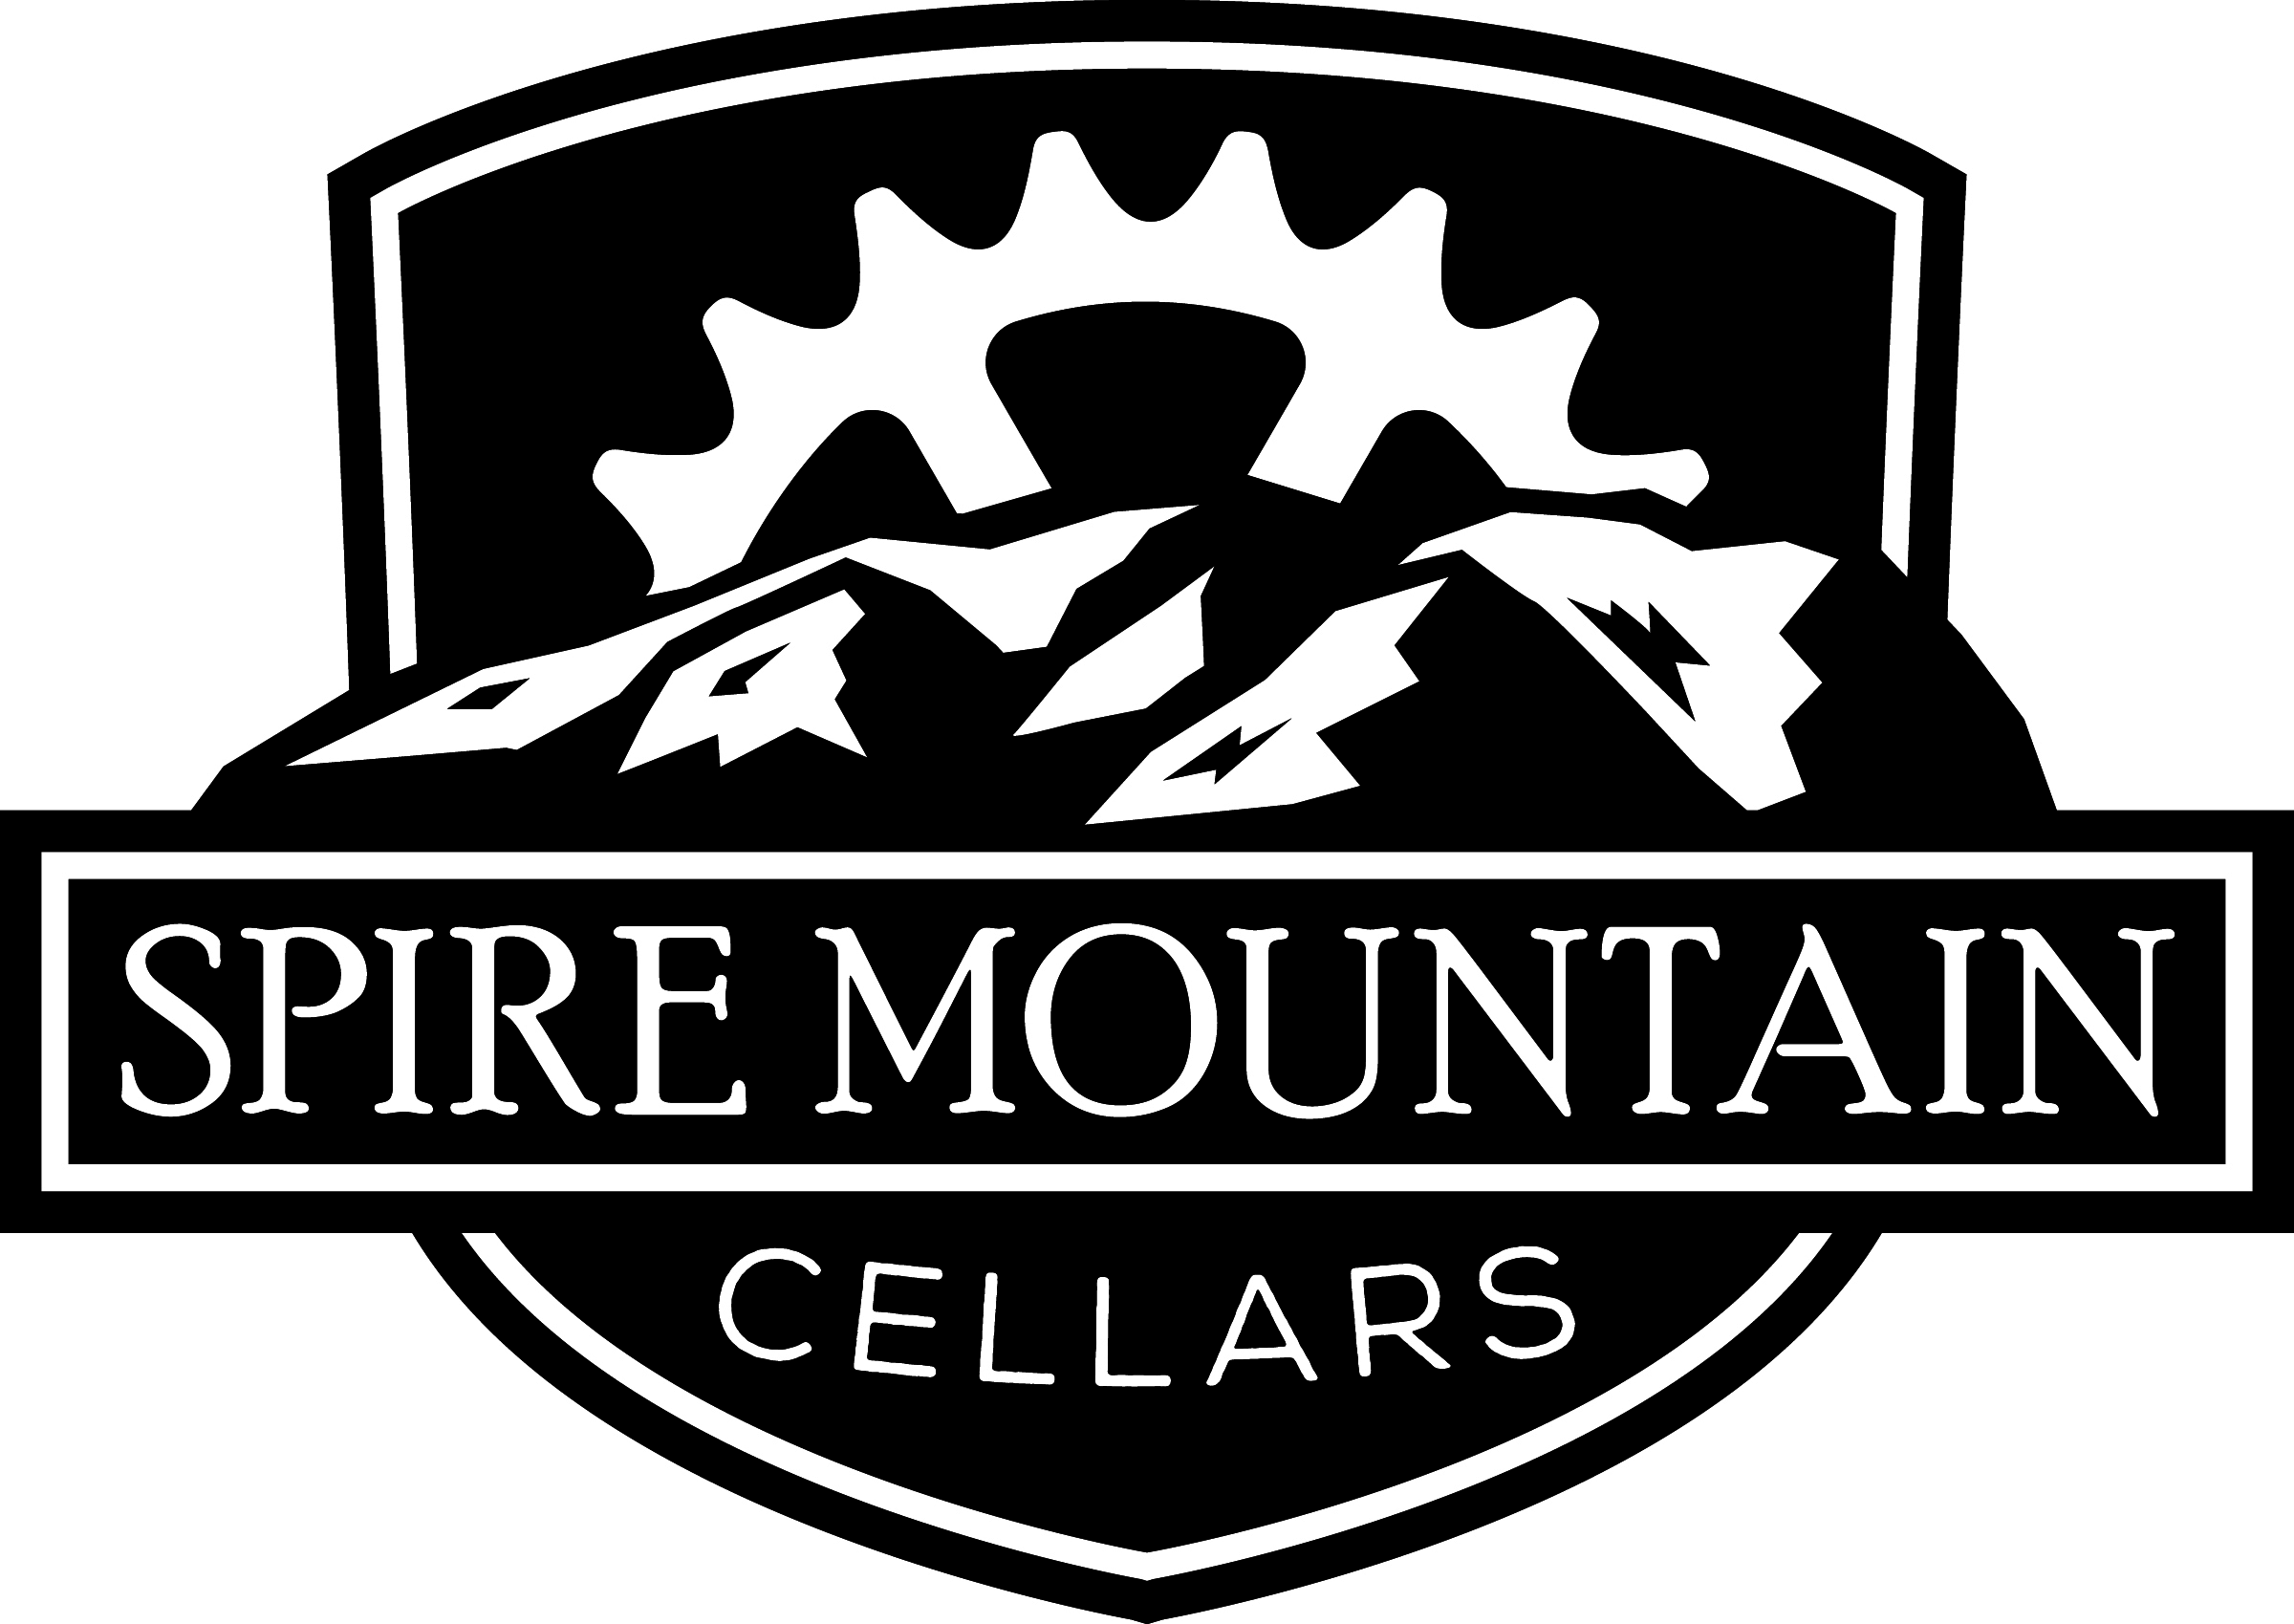 Spire Mountain Cellars